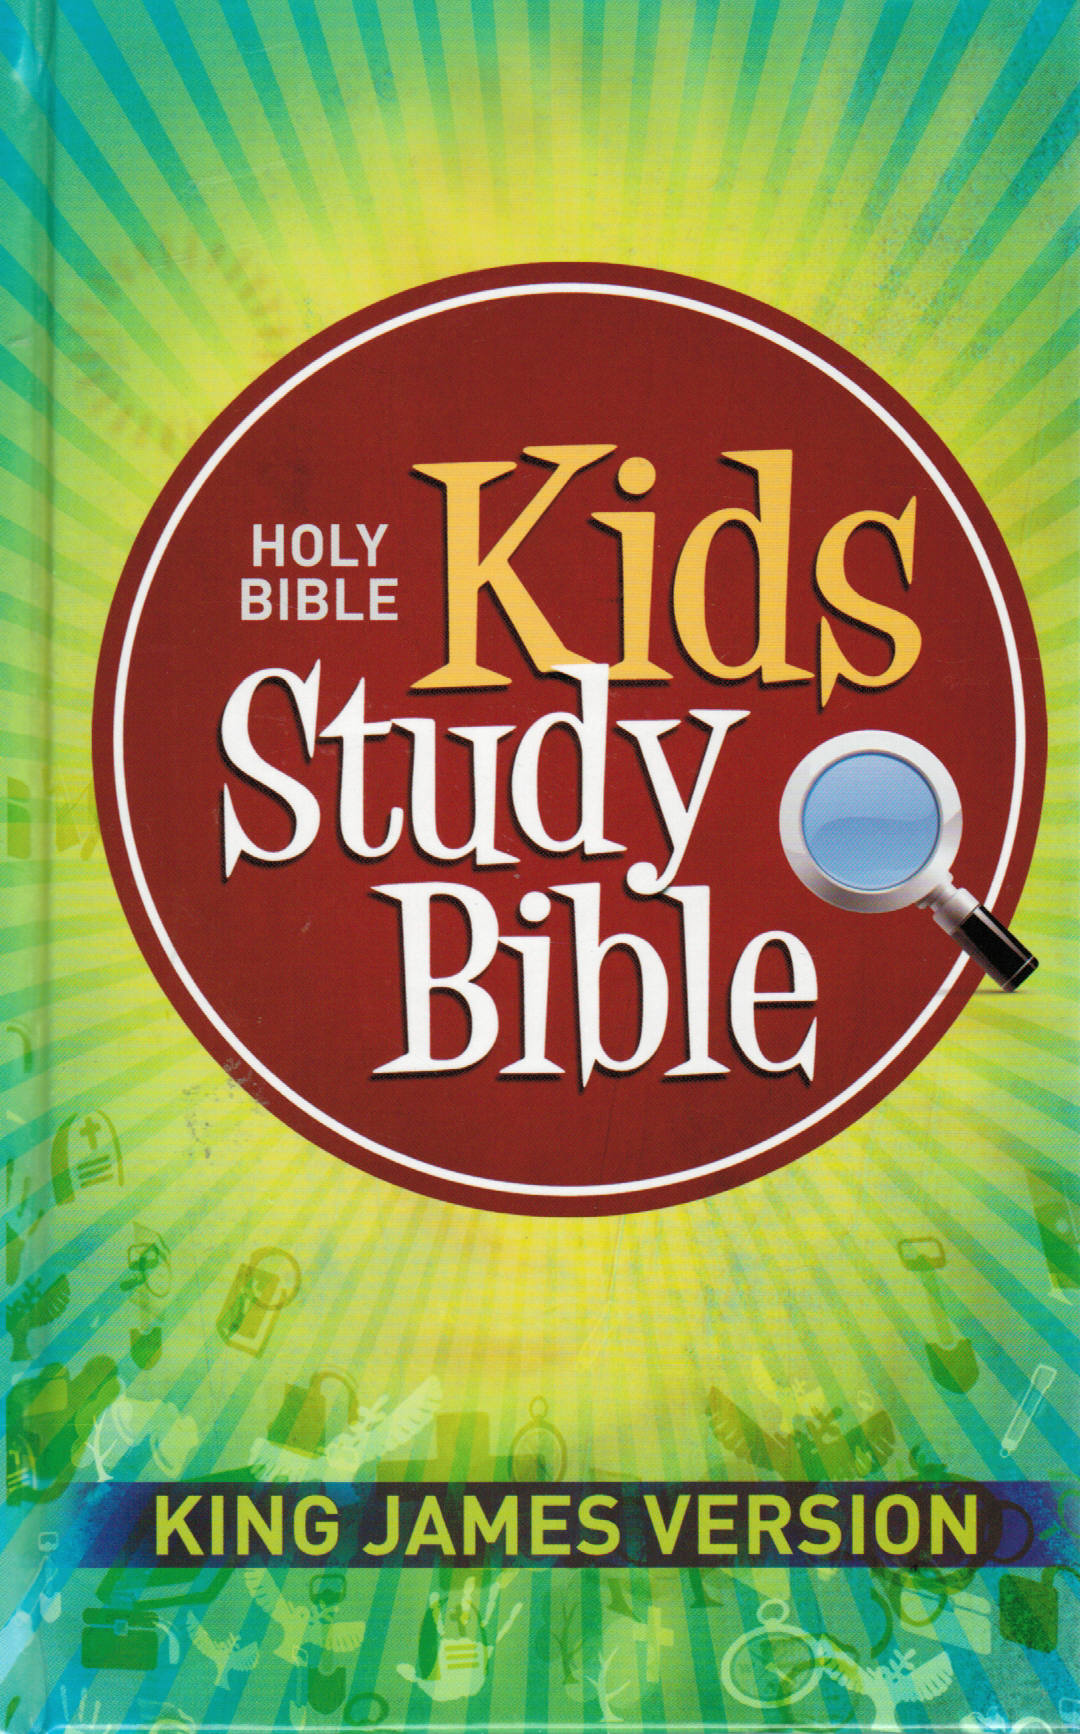 KJV Bible - Kid's Study Bible